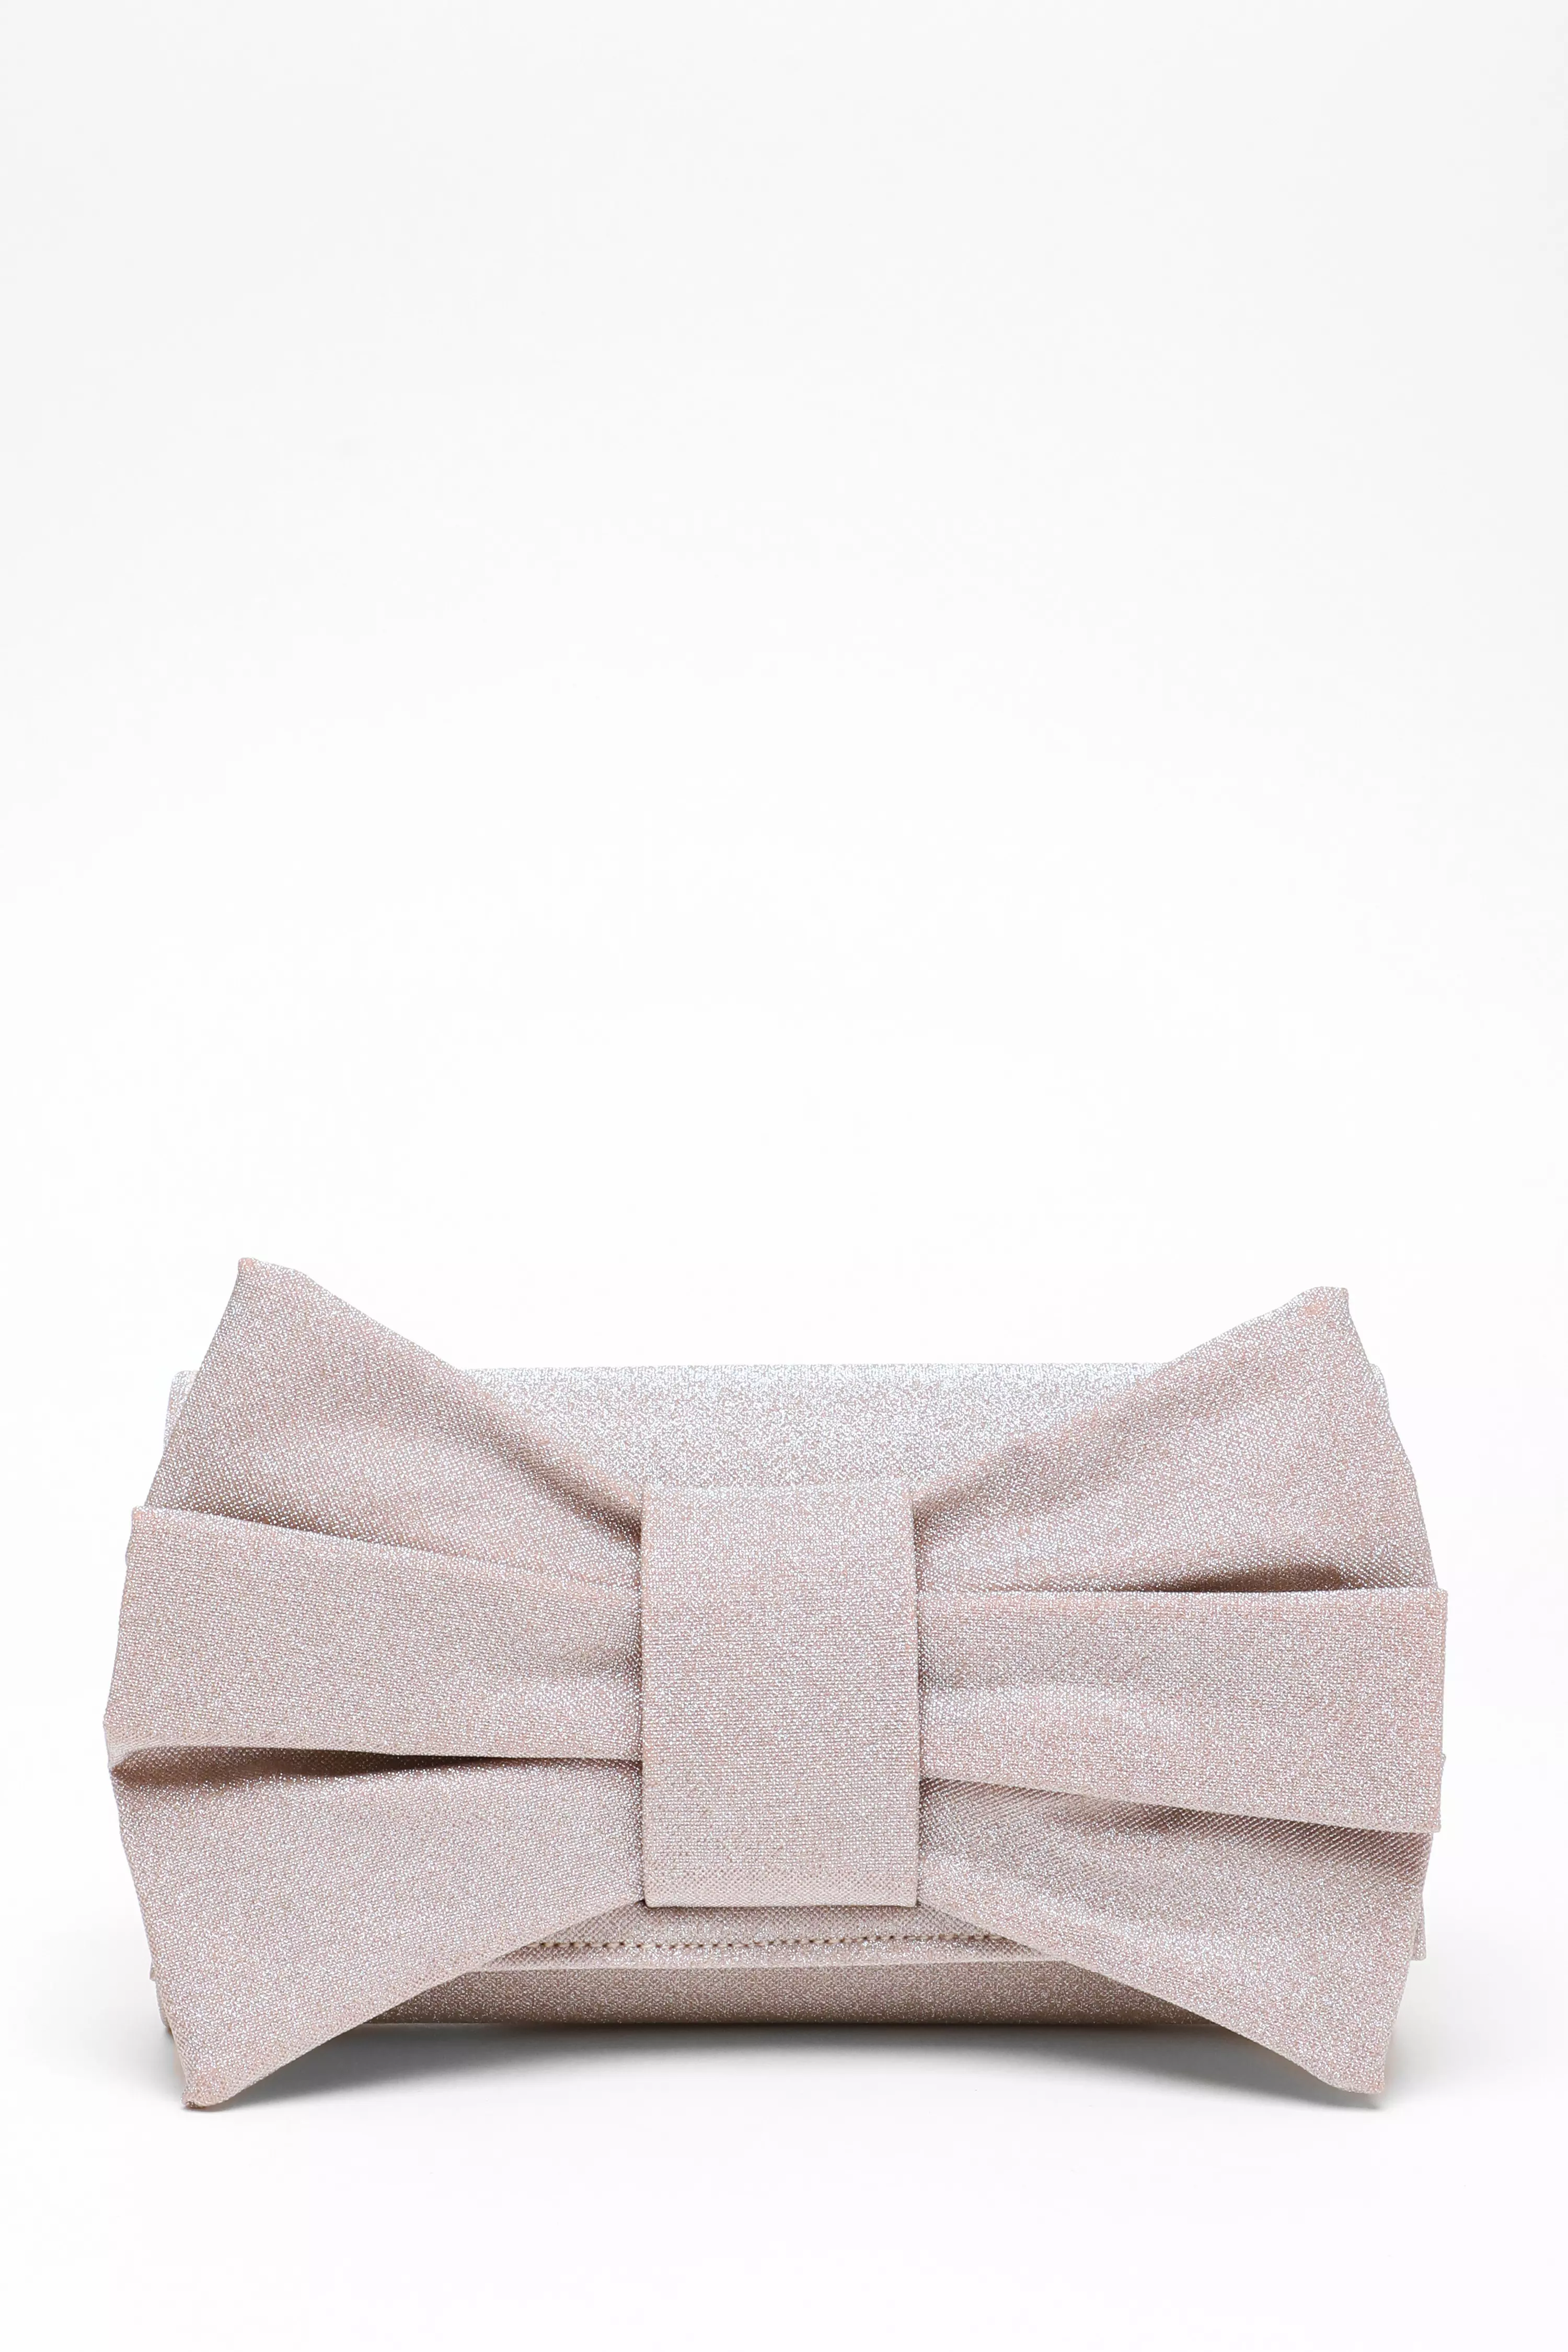 Pink Glitter Bow Bag